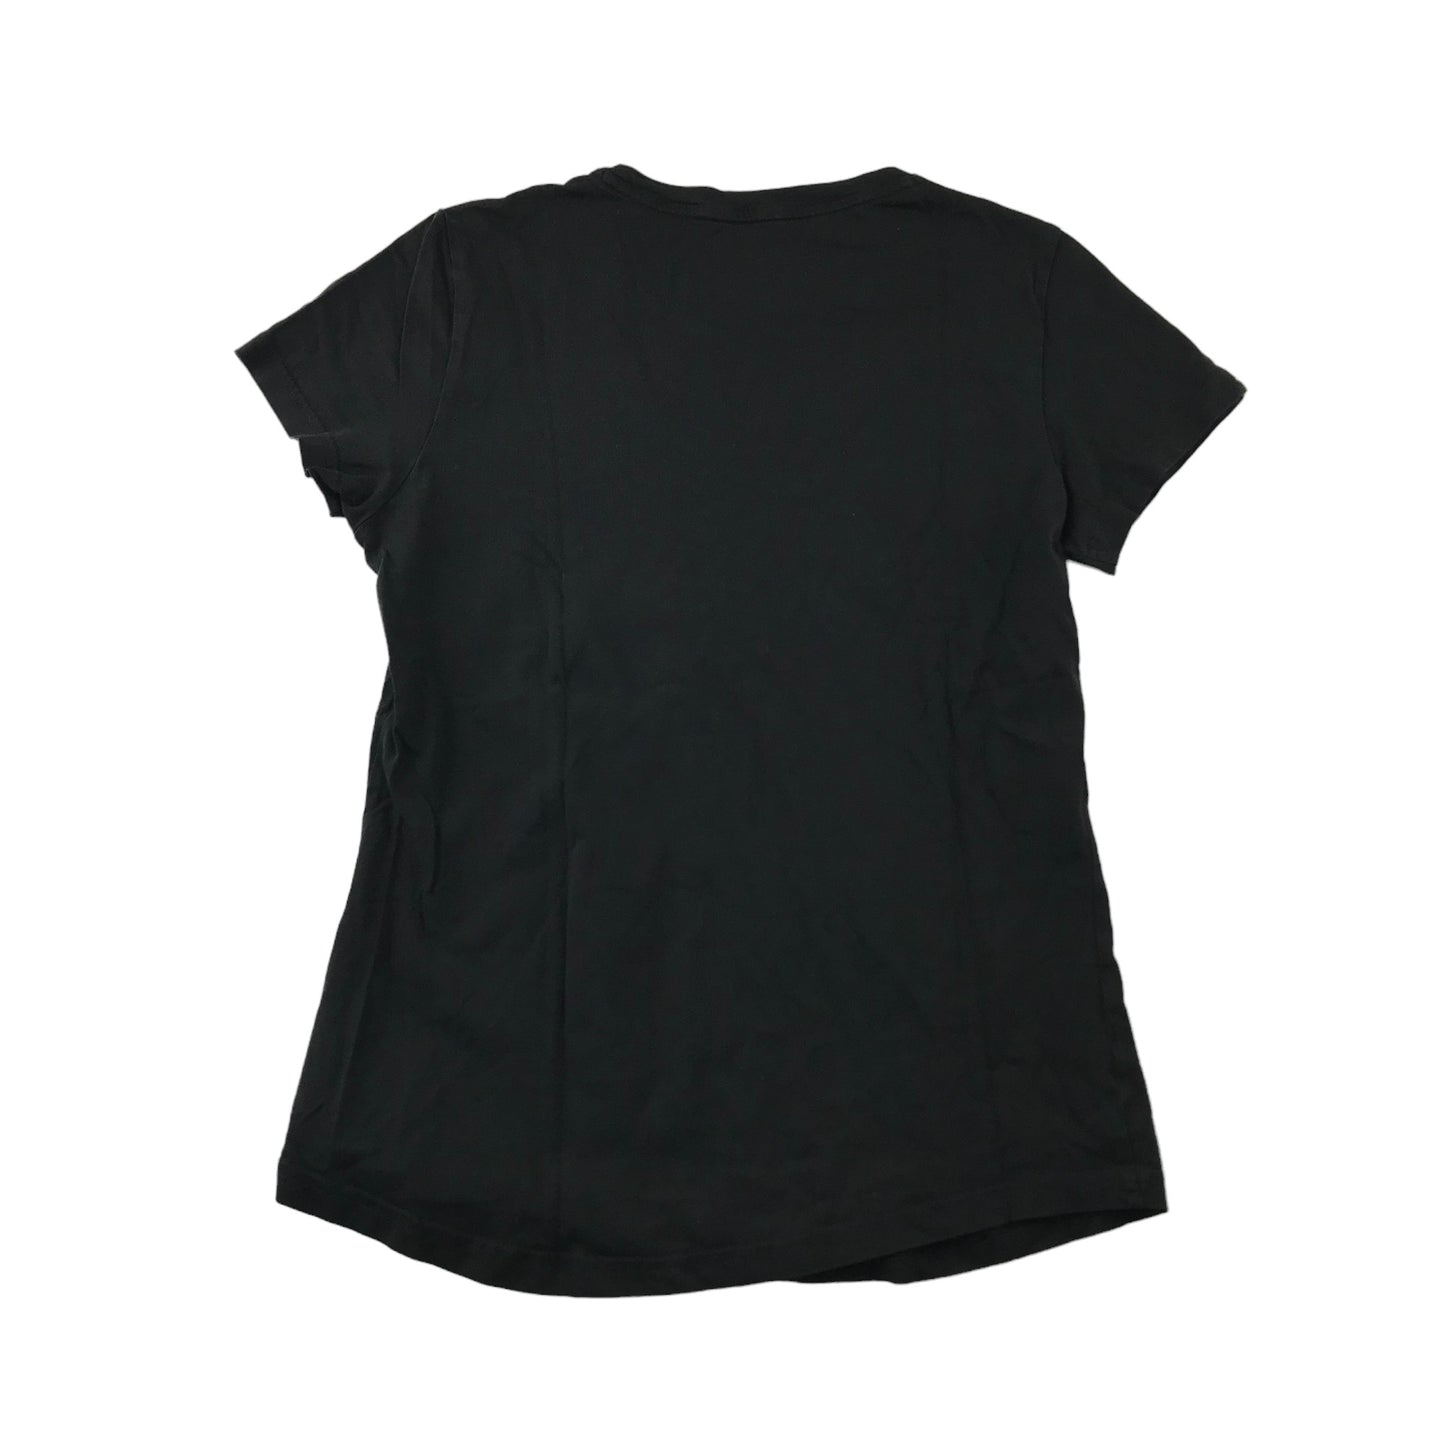 Puma T-Shirt Age 14-15 Black Multicoloured Logo Cotton